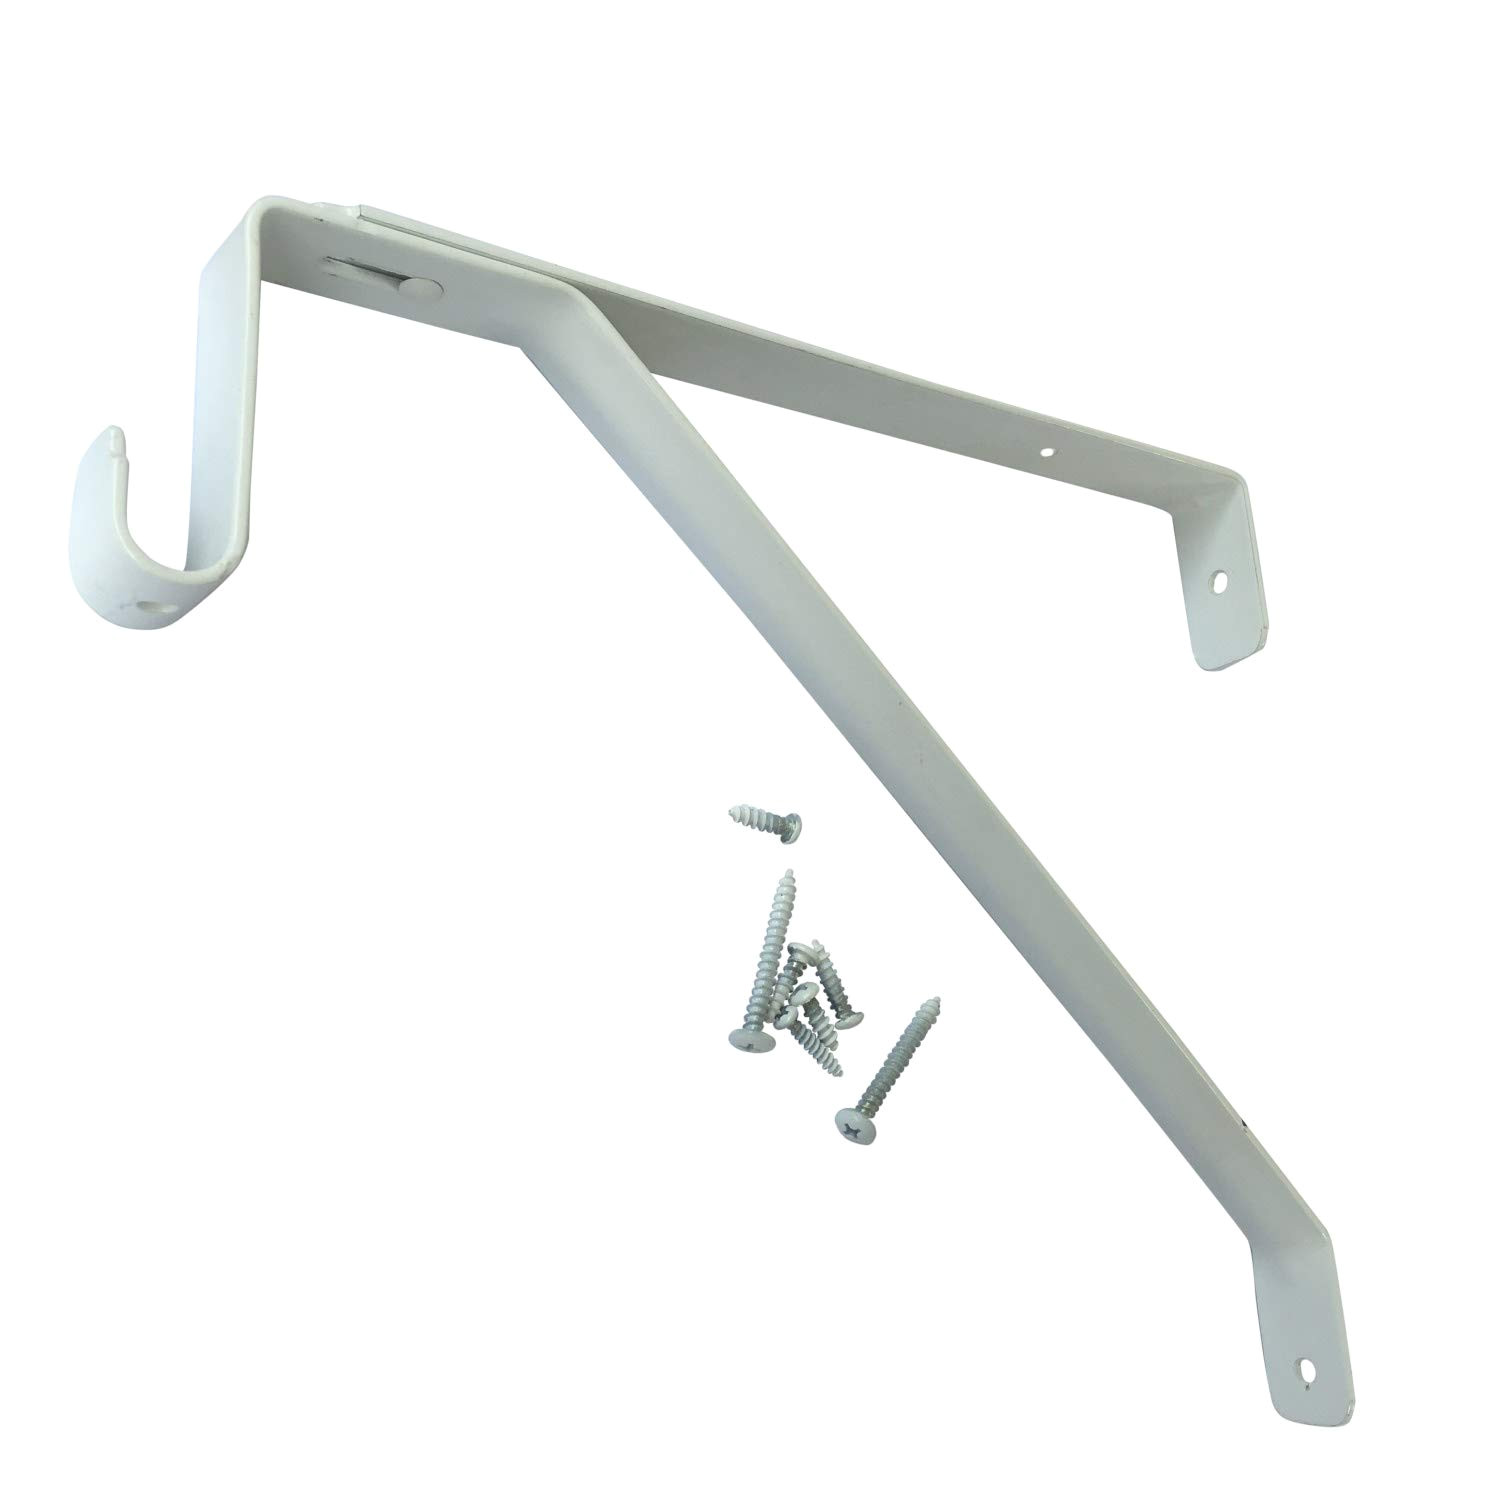 desunia oval closet rod shelf bracket adjustable for rear cleat strip white 1